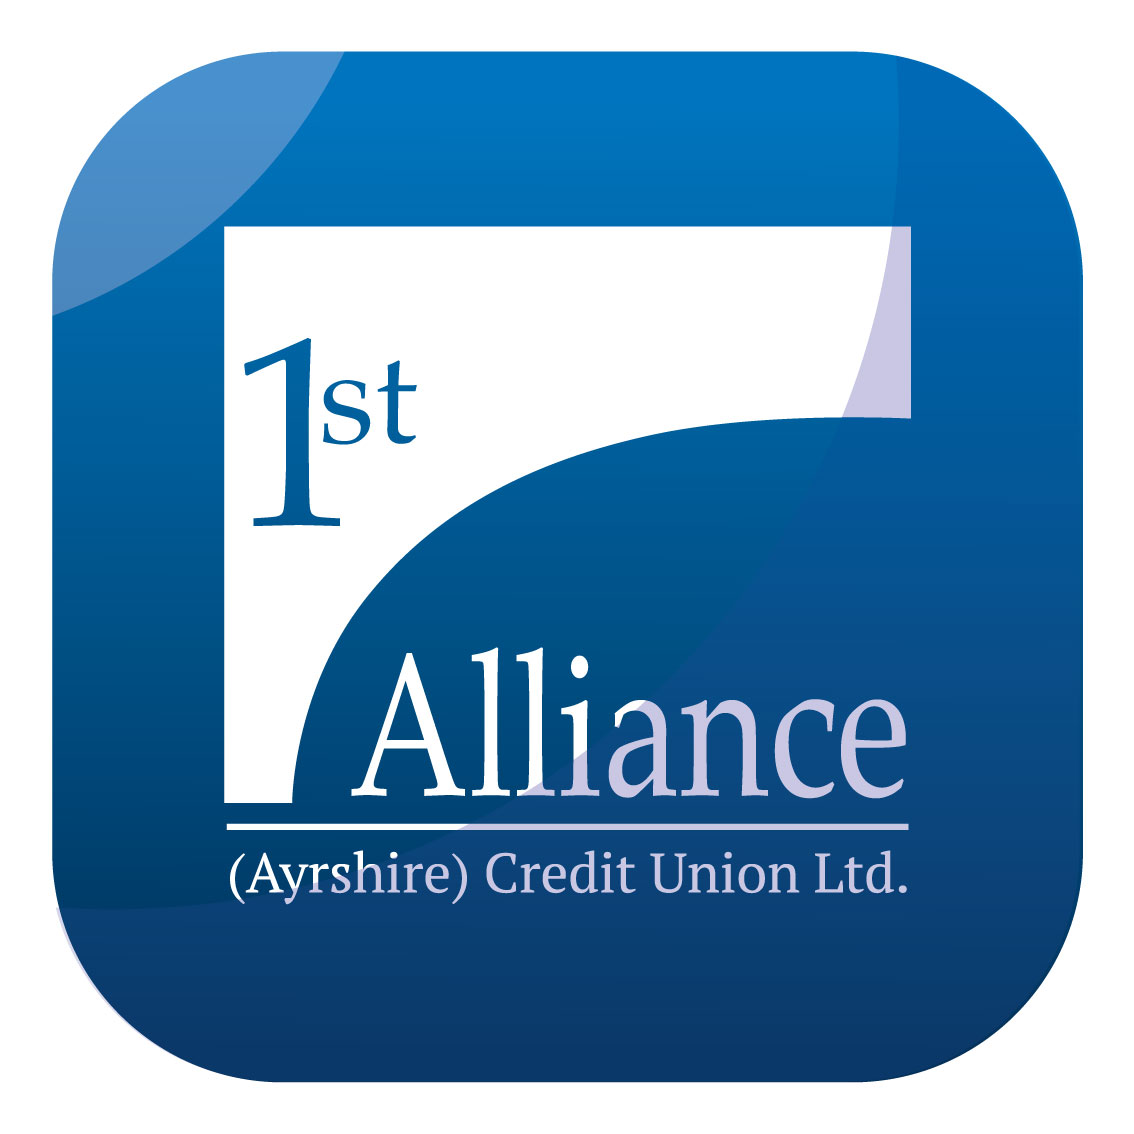 1st Alliance (Ayrshire) Credit Union